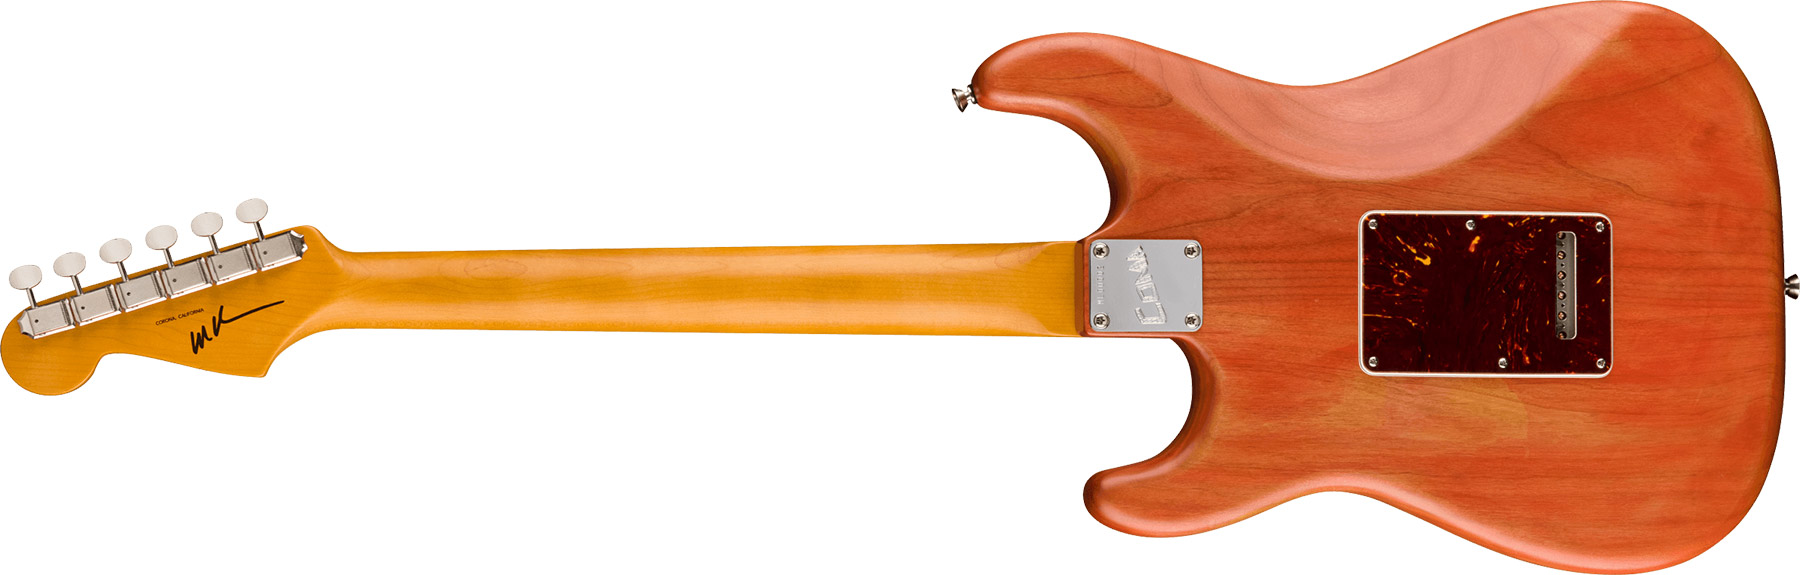 Fender Michael Landau Strat Coma Stories Usa Signature Hss Trem Rw - Coma Red - E-Gitarre in Str-Form - Variation 1